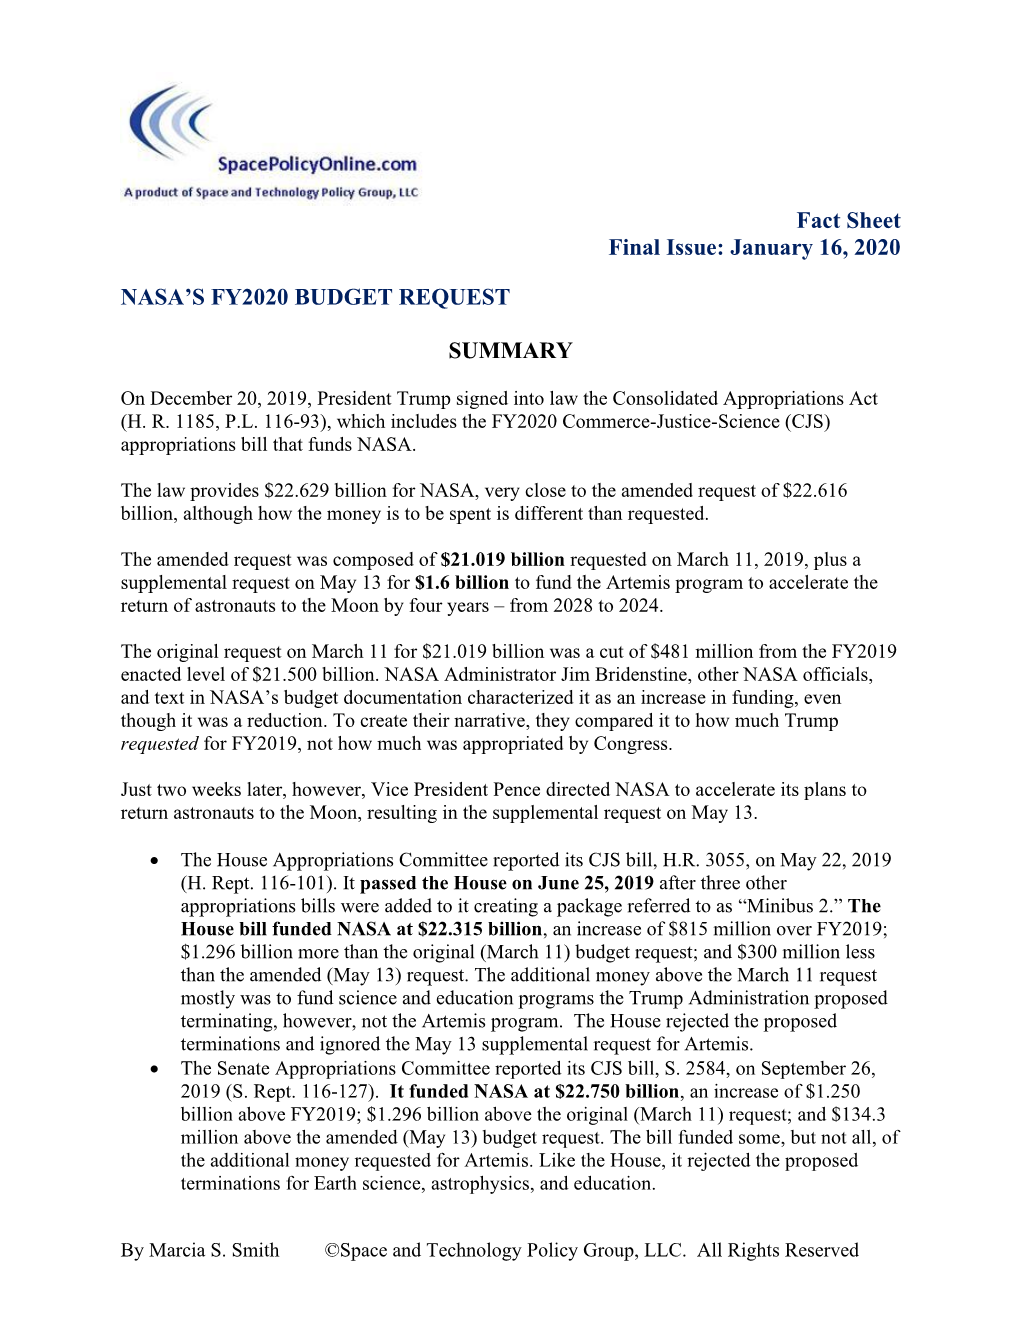 Fact Sheet Final Issue: January 16, 2020 NASA's FY2020 BUDGET